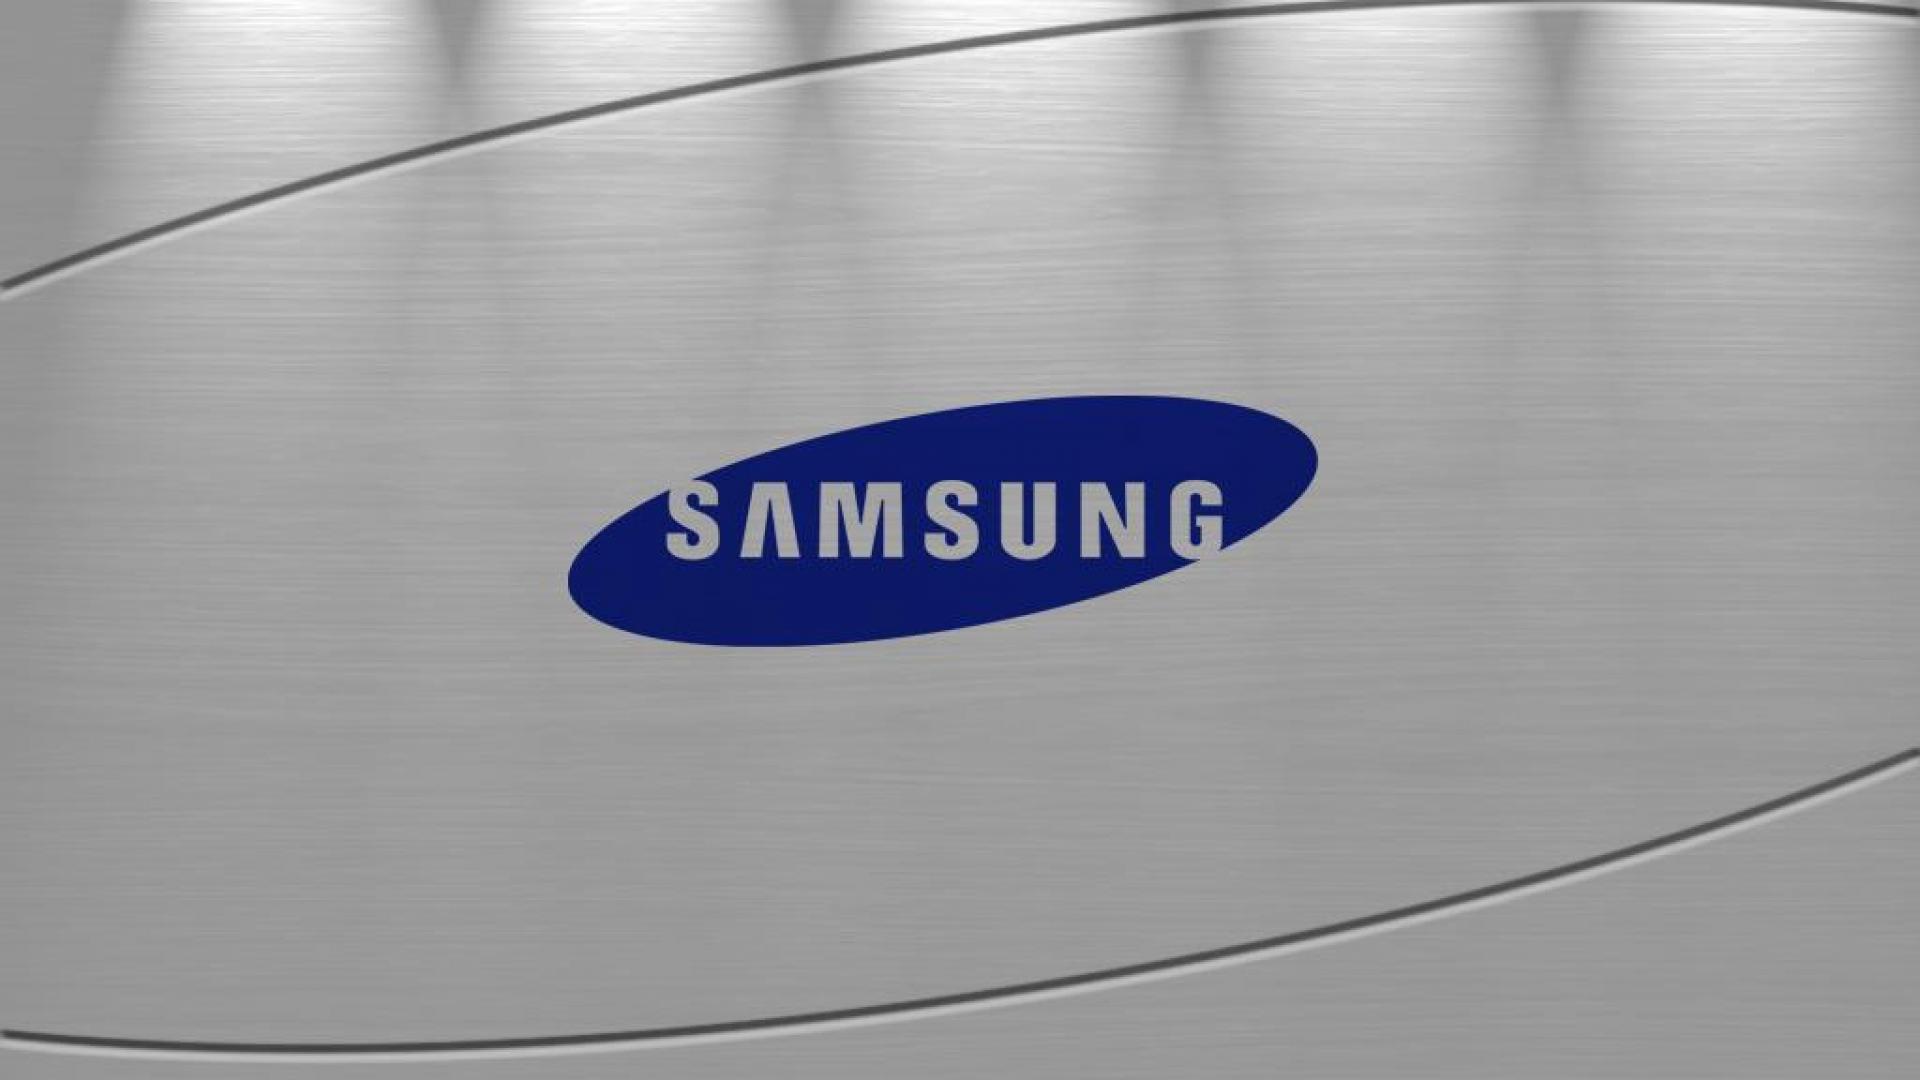 Samsung Logo on Brushed Metal   1920x1080   Full HD 169